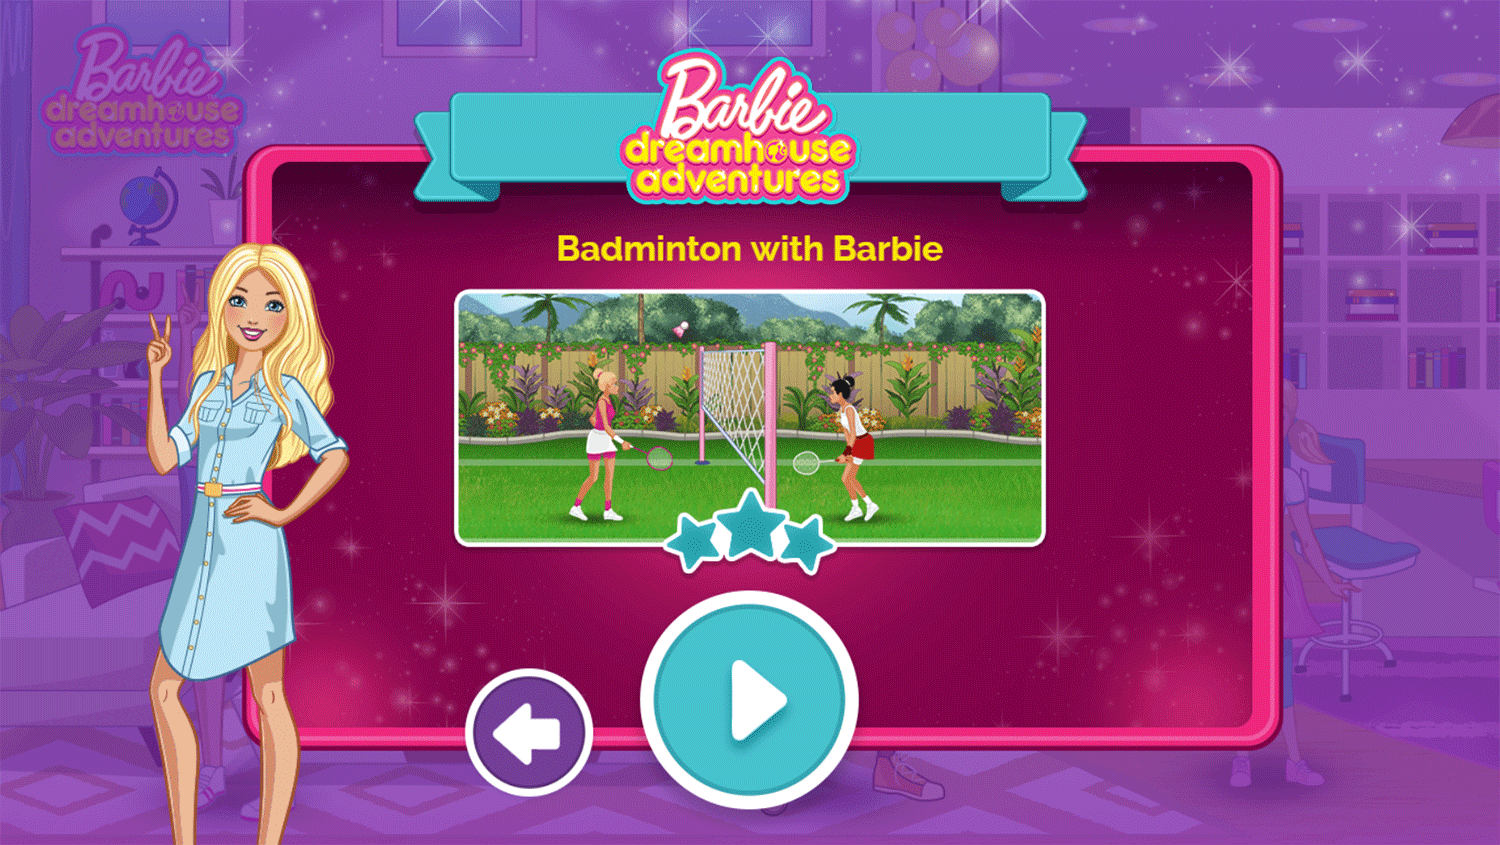 Barbie Dreamhouse Adventure Badminton with Barbie Game Welcome Screenshot.